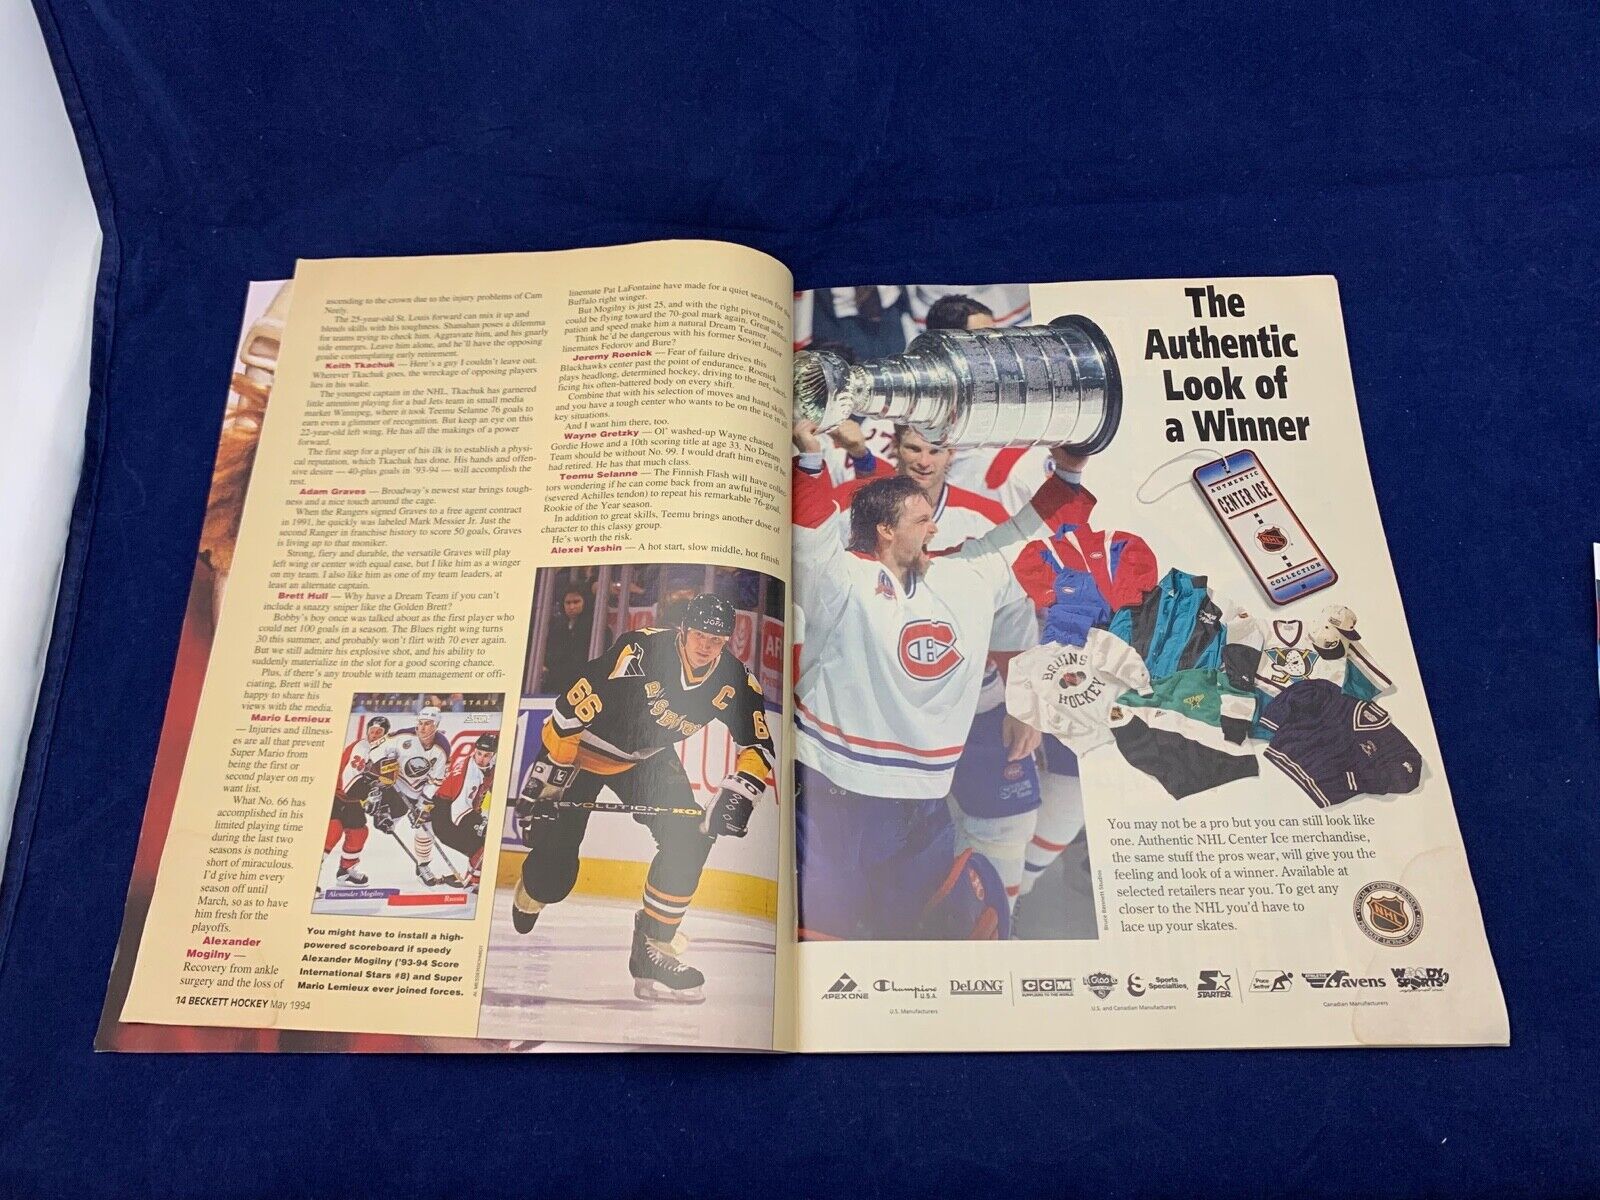 Patrick Roy Autographed Beckett Hockey Magazine 43 1994 JSA COA HH75180